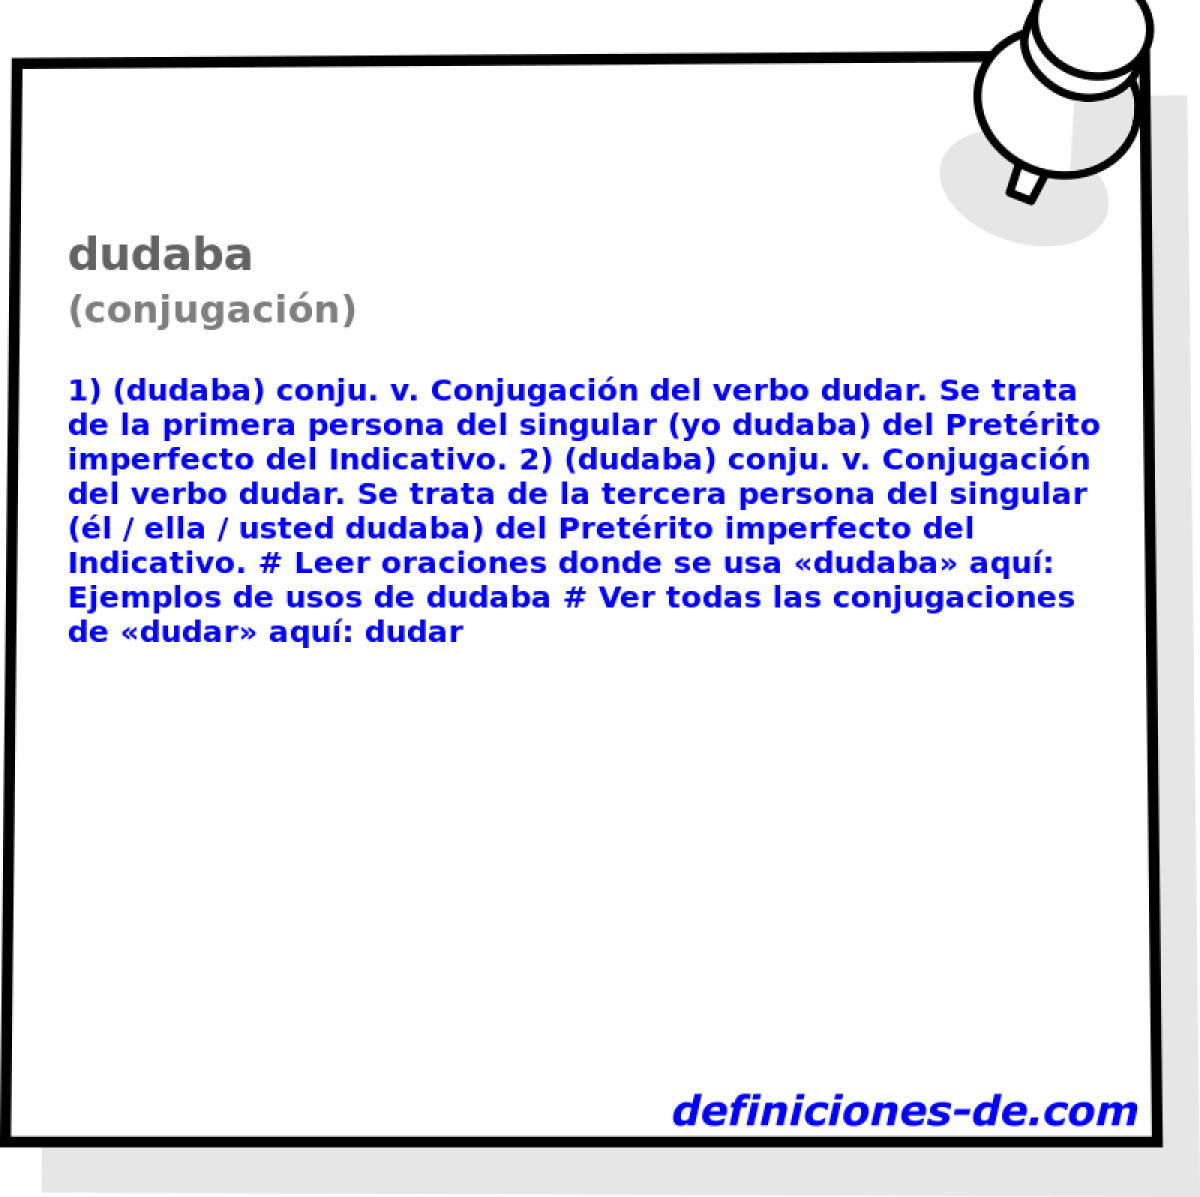 dudaba (conjugacin)